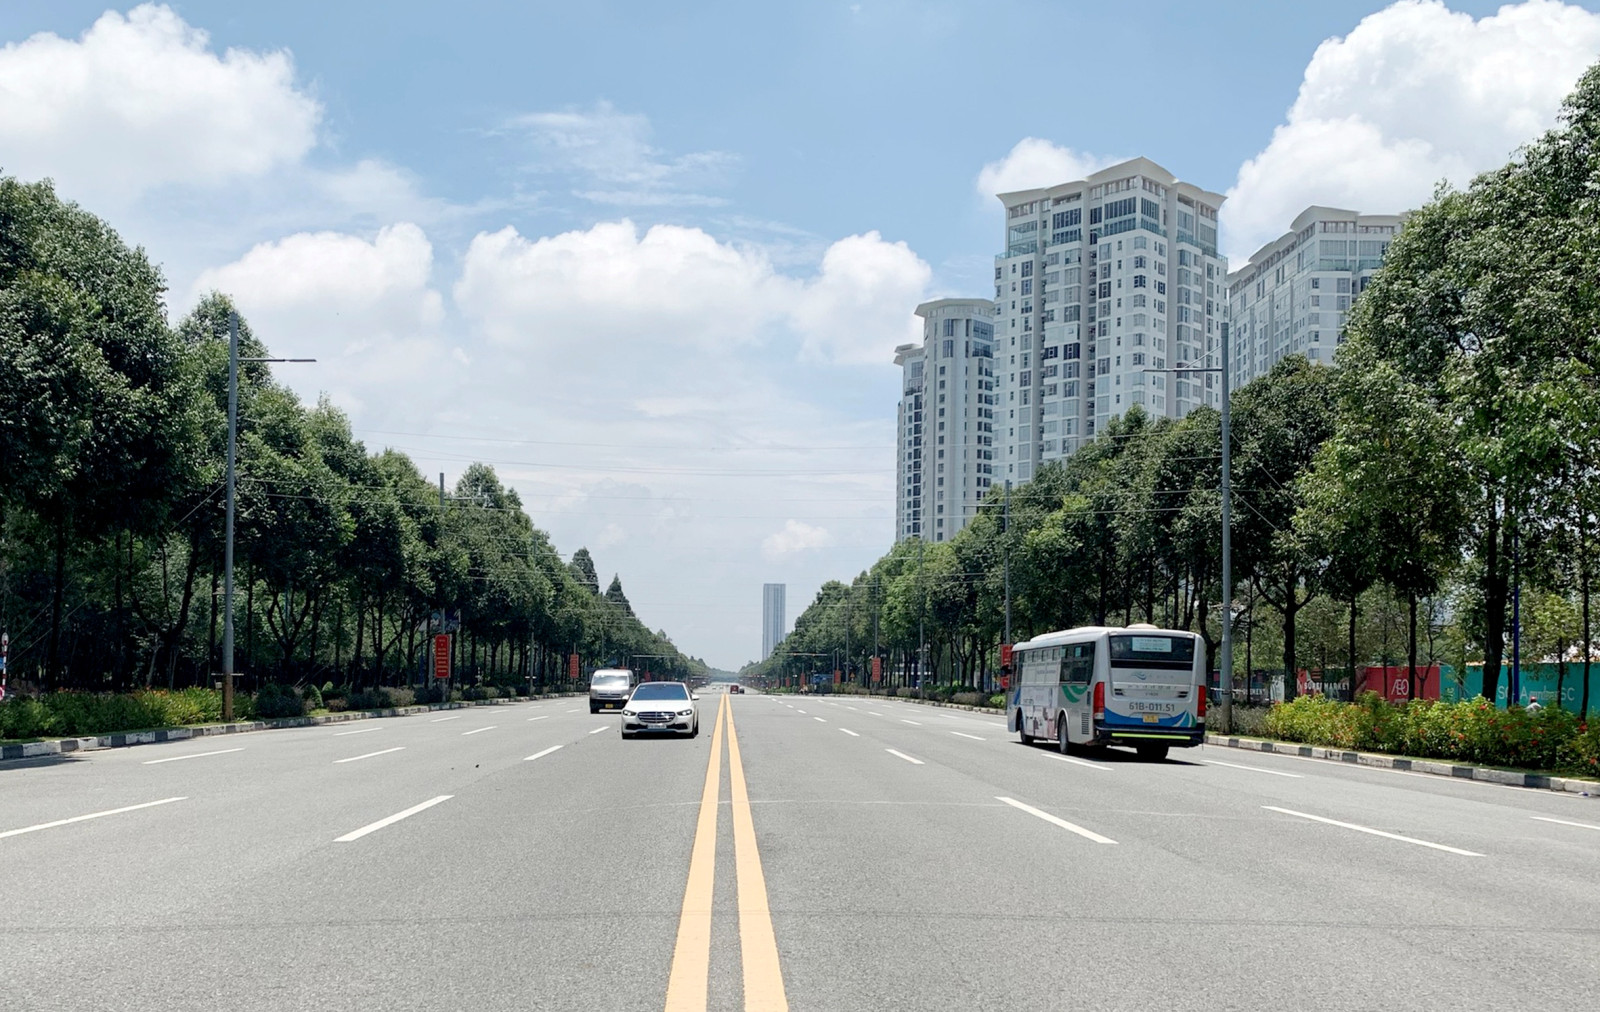 Urban upgrade, perspective from reality - Báo Bình Dương Online